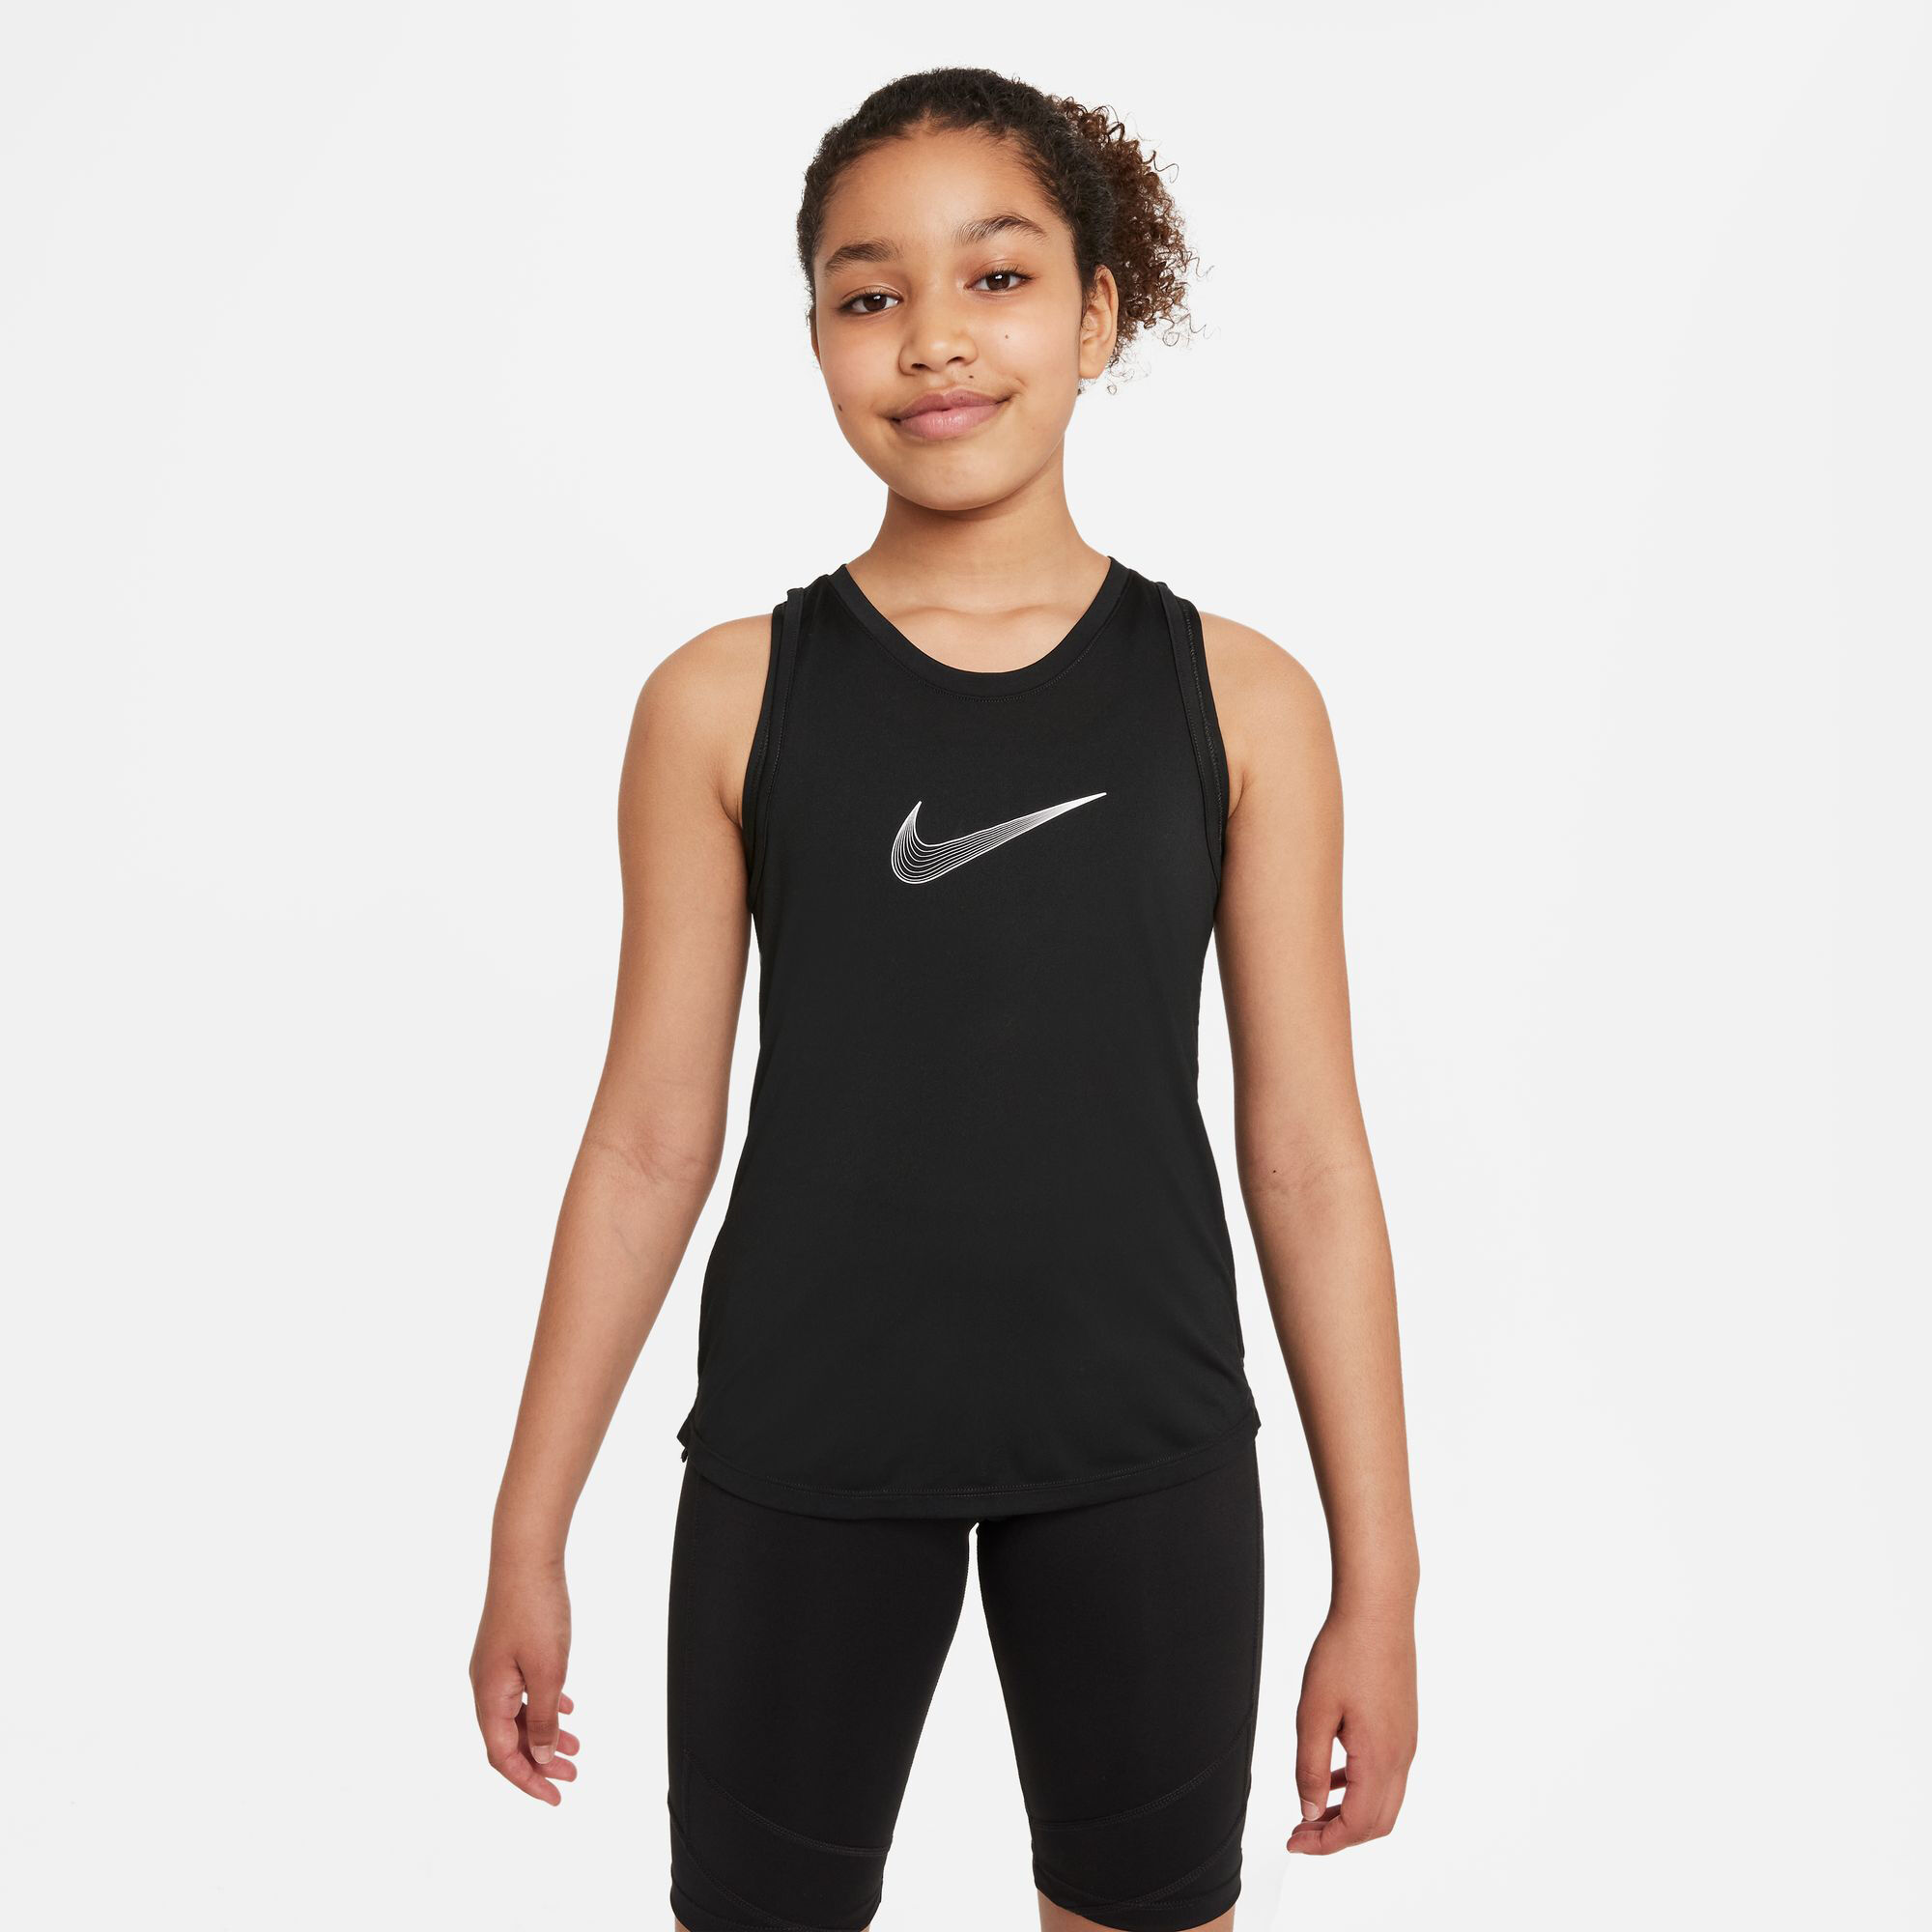 Buy Nike Dri-Fit One GX Tank Top Girls Black online